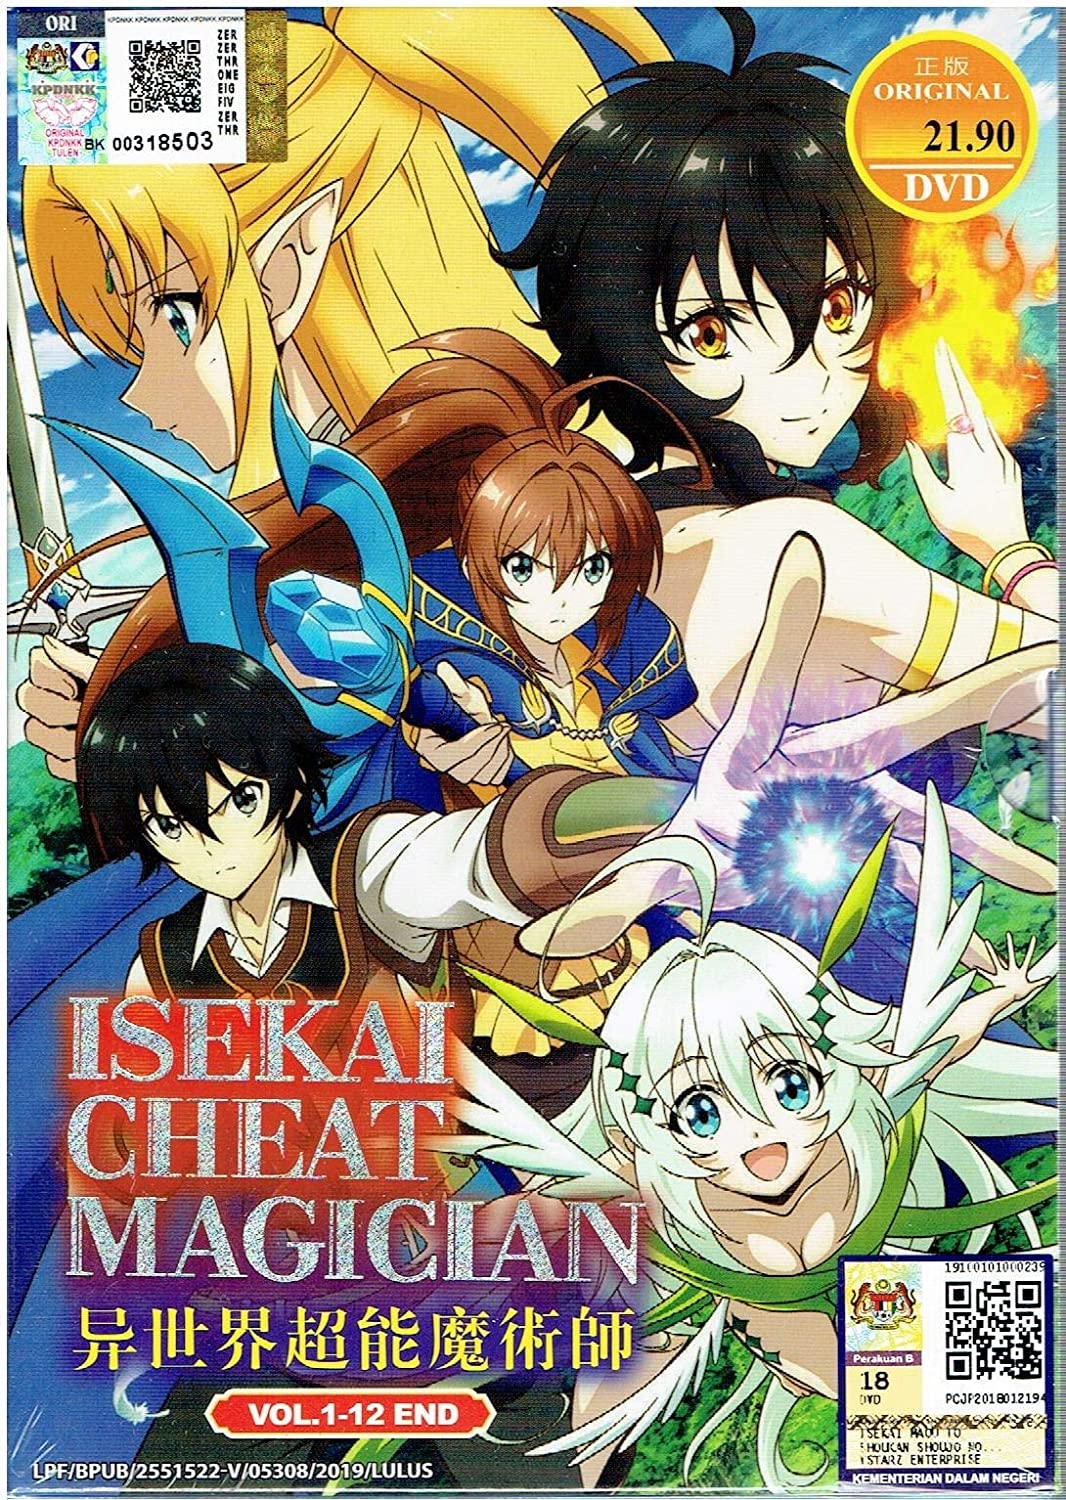 ISEKAI CHEAT MAGICIAN ANIME TV SERIES DVD